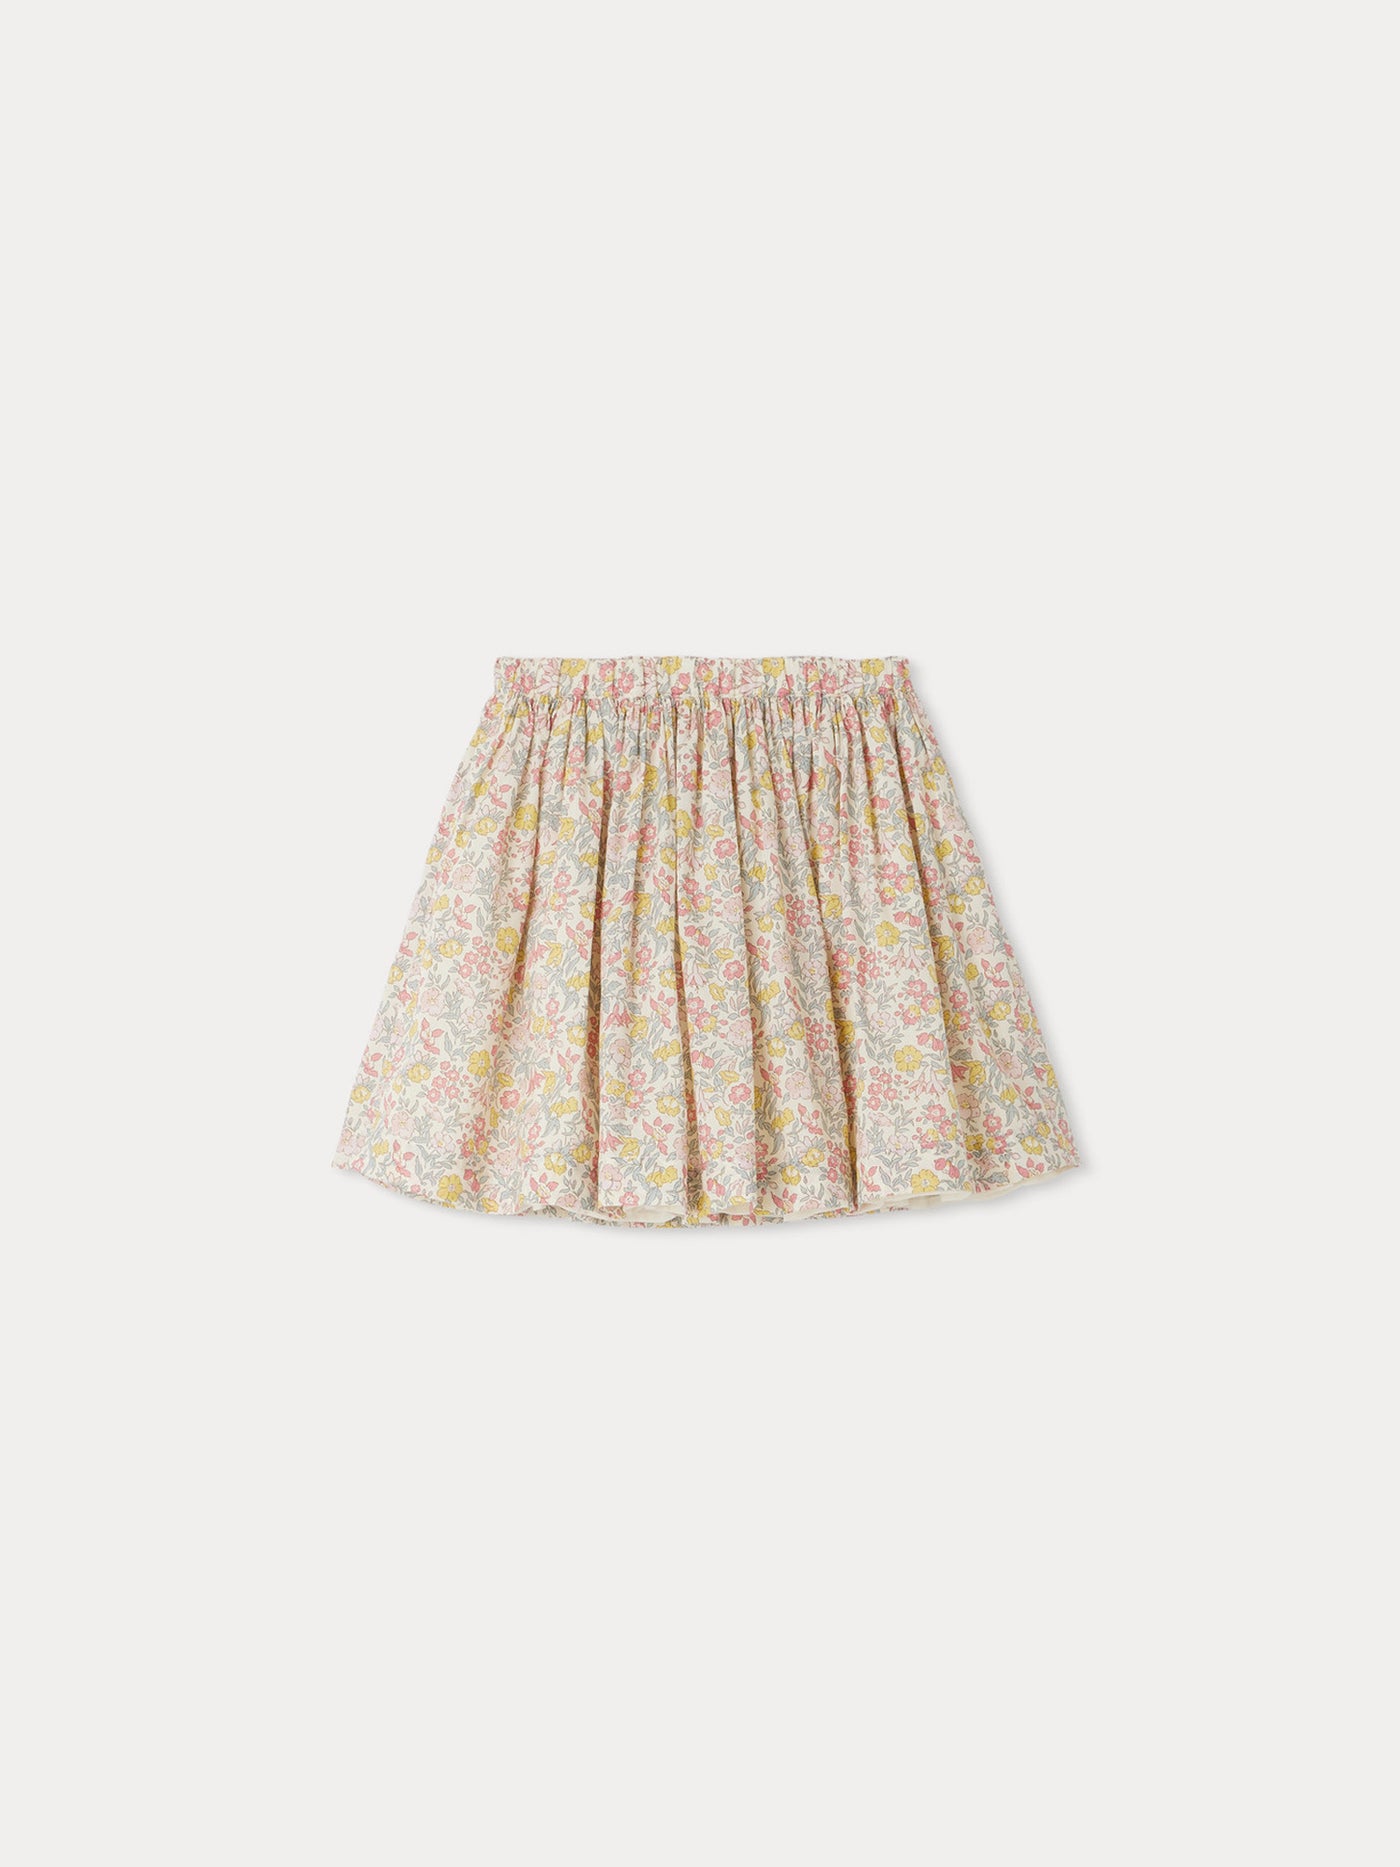 Suzon skirt in organic Liberty fabric